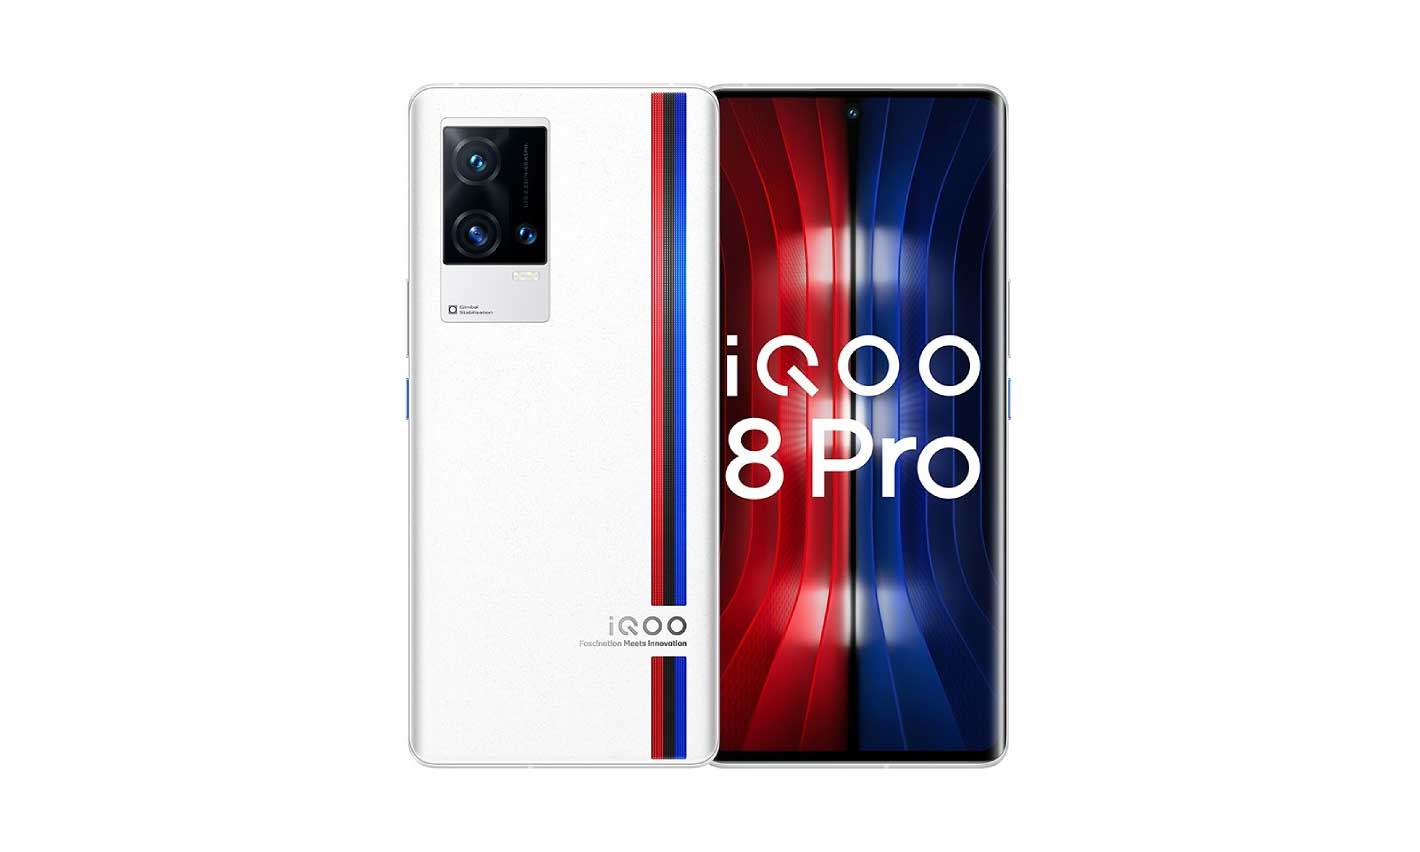 Harga Spesifikasi Vivo Iqoo 8 pro kamera ram sistem operasi baterai indonesia